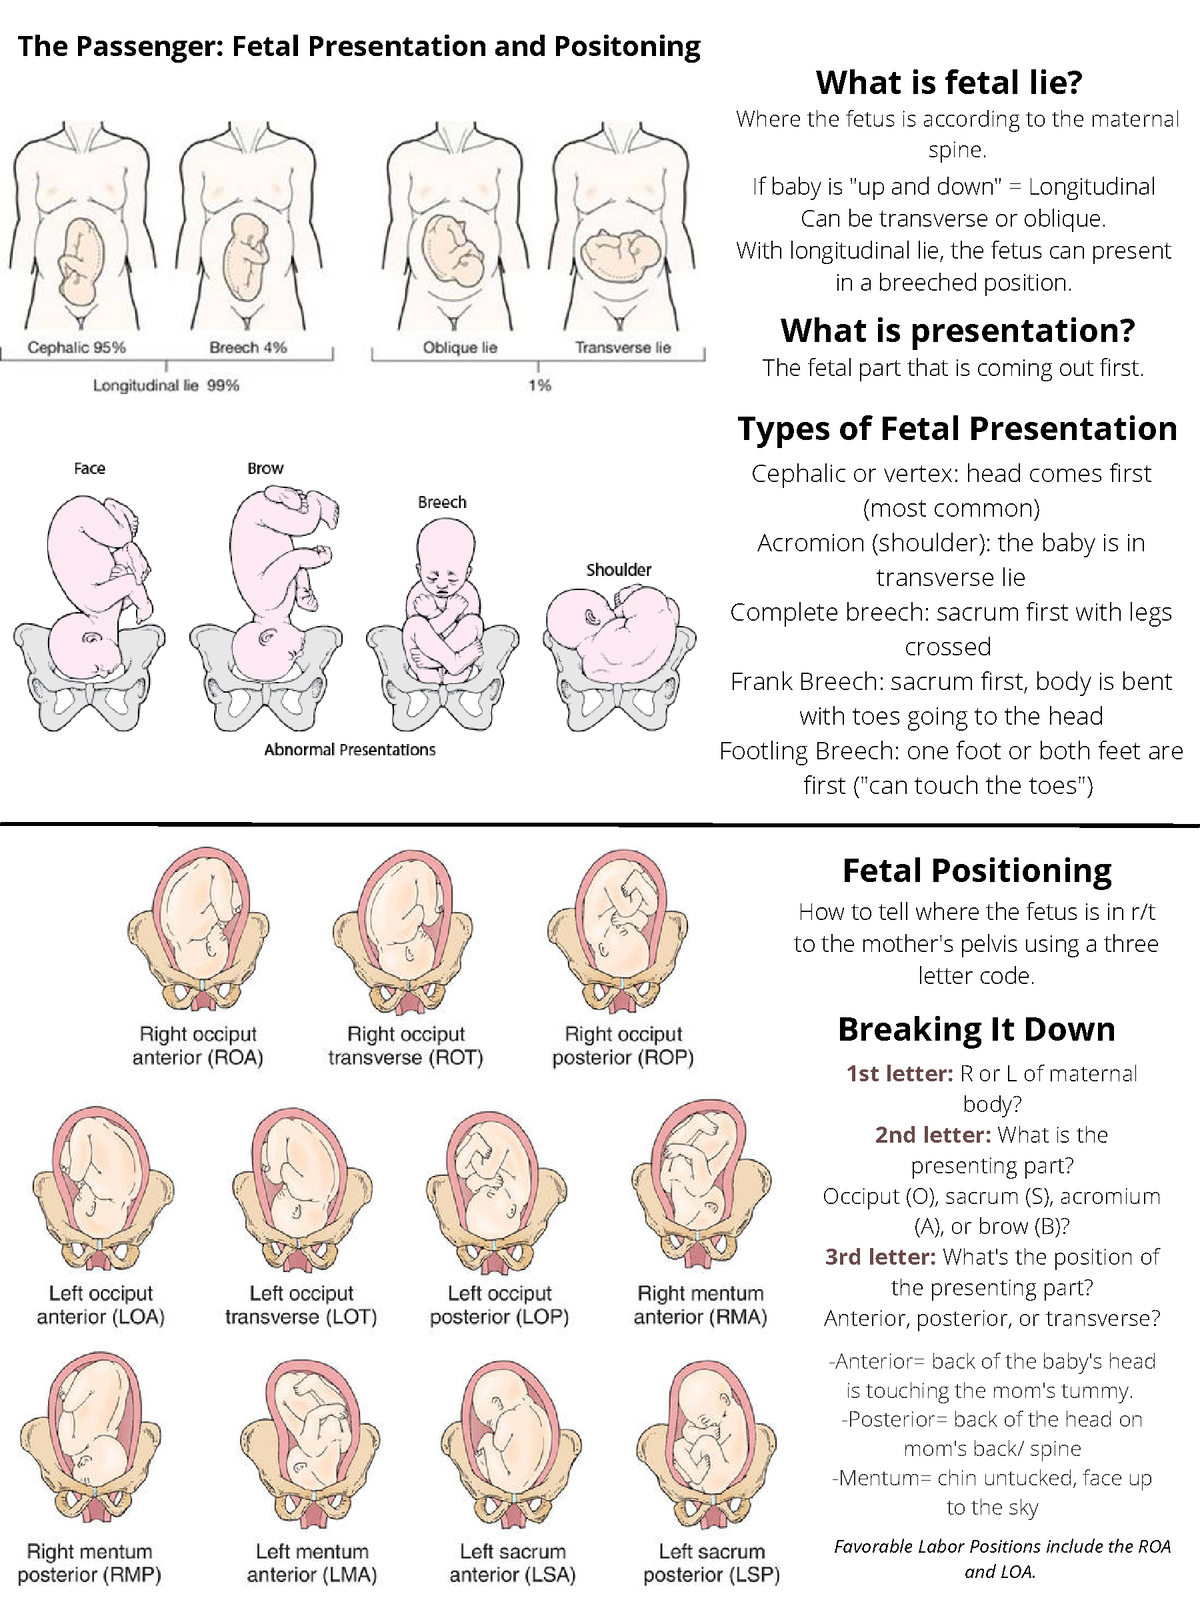 types of presentation of fetus